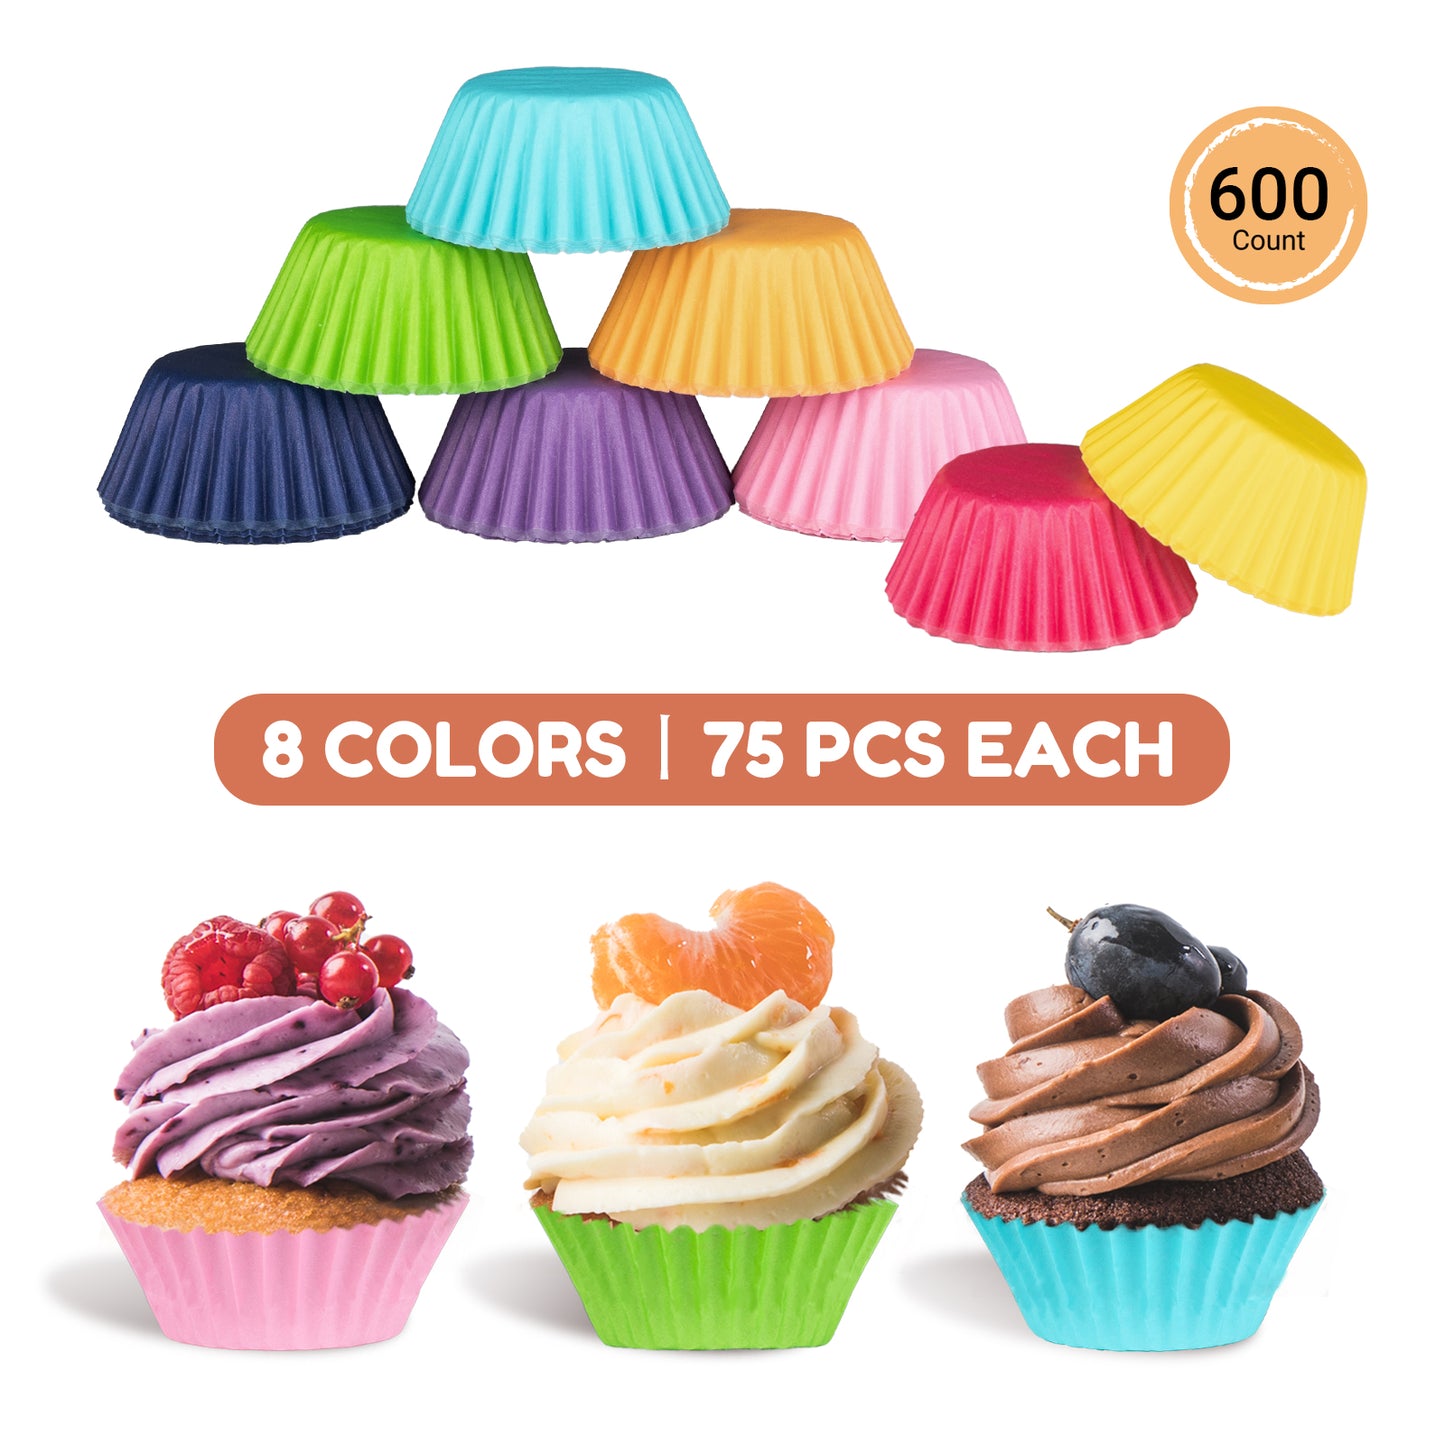 Parmedu 600pcs Mini Paper Cupcake Liners